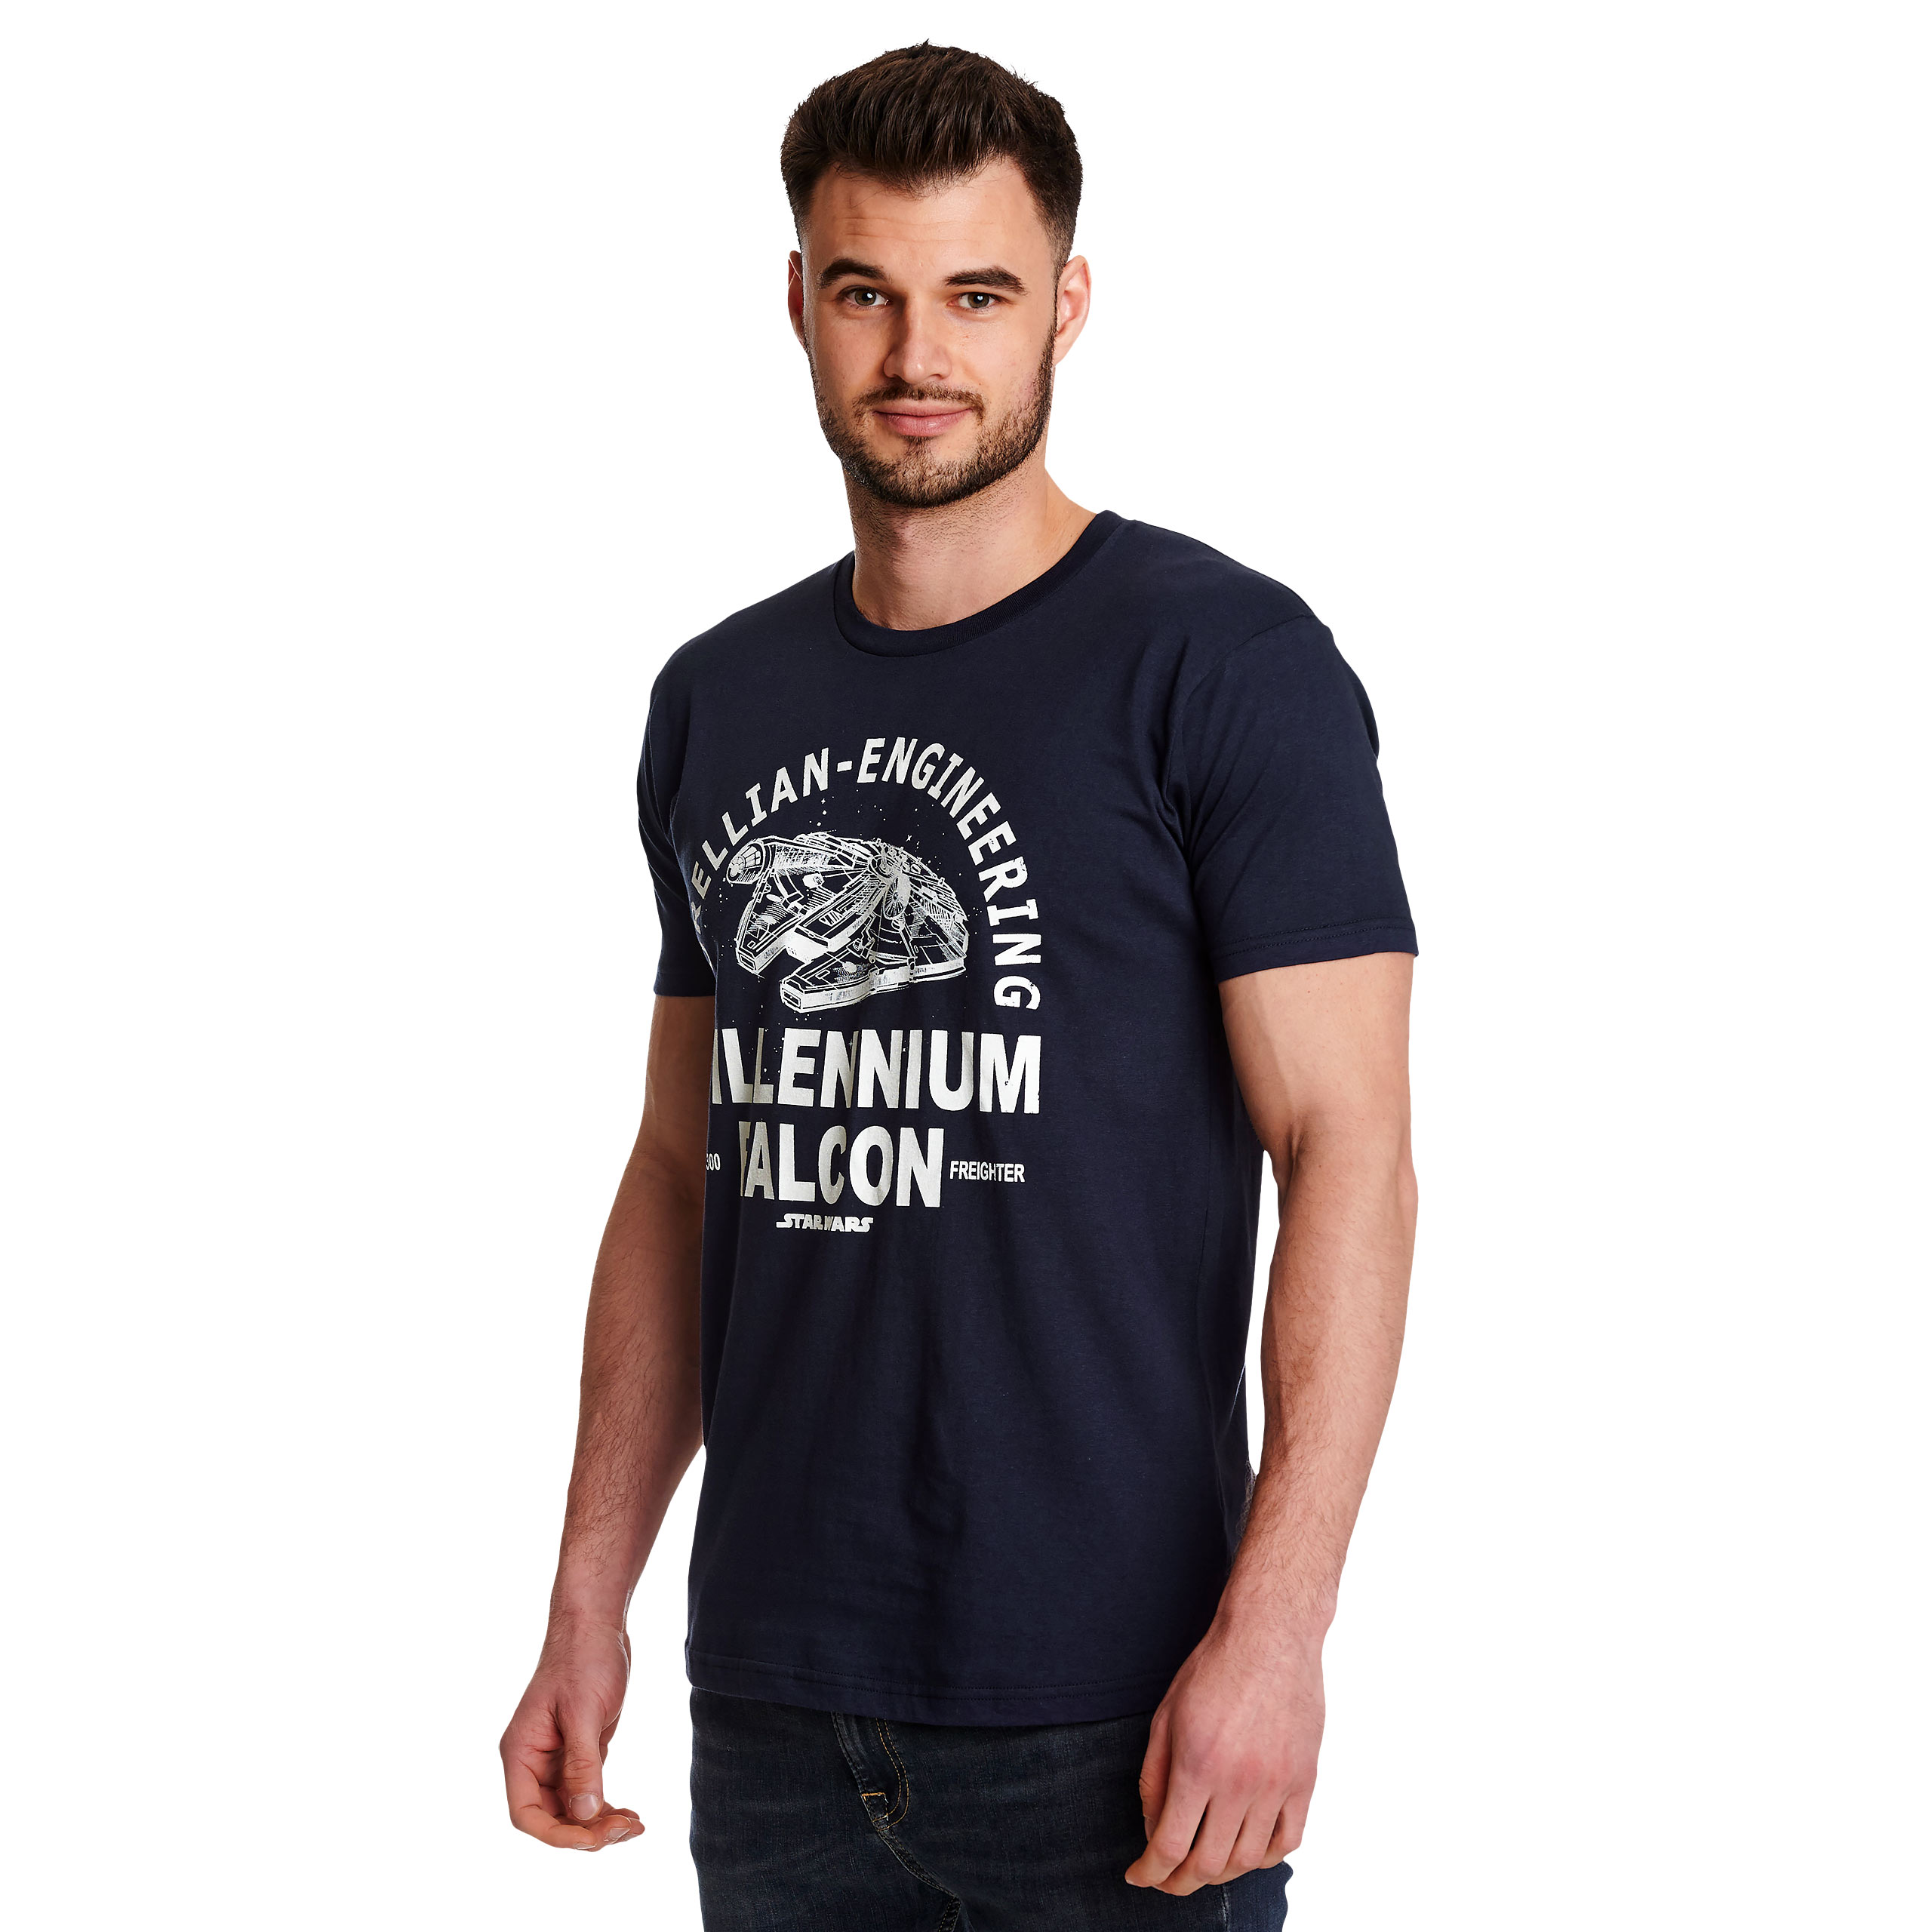 Star Wars - Millennium Falcon Corellian Engineering T-Shirt blau